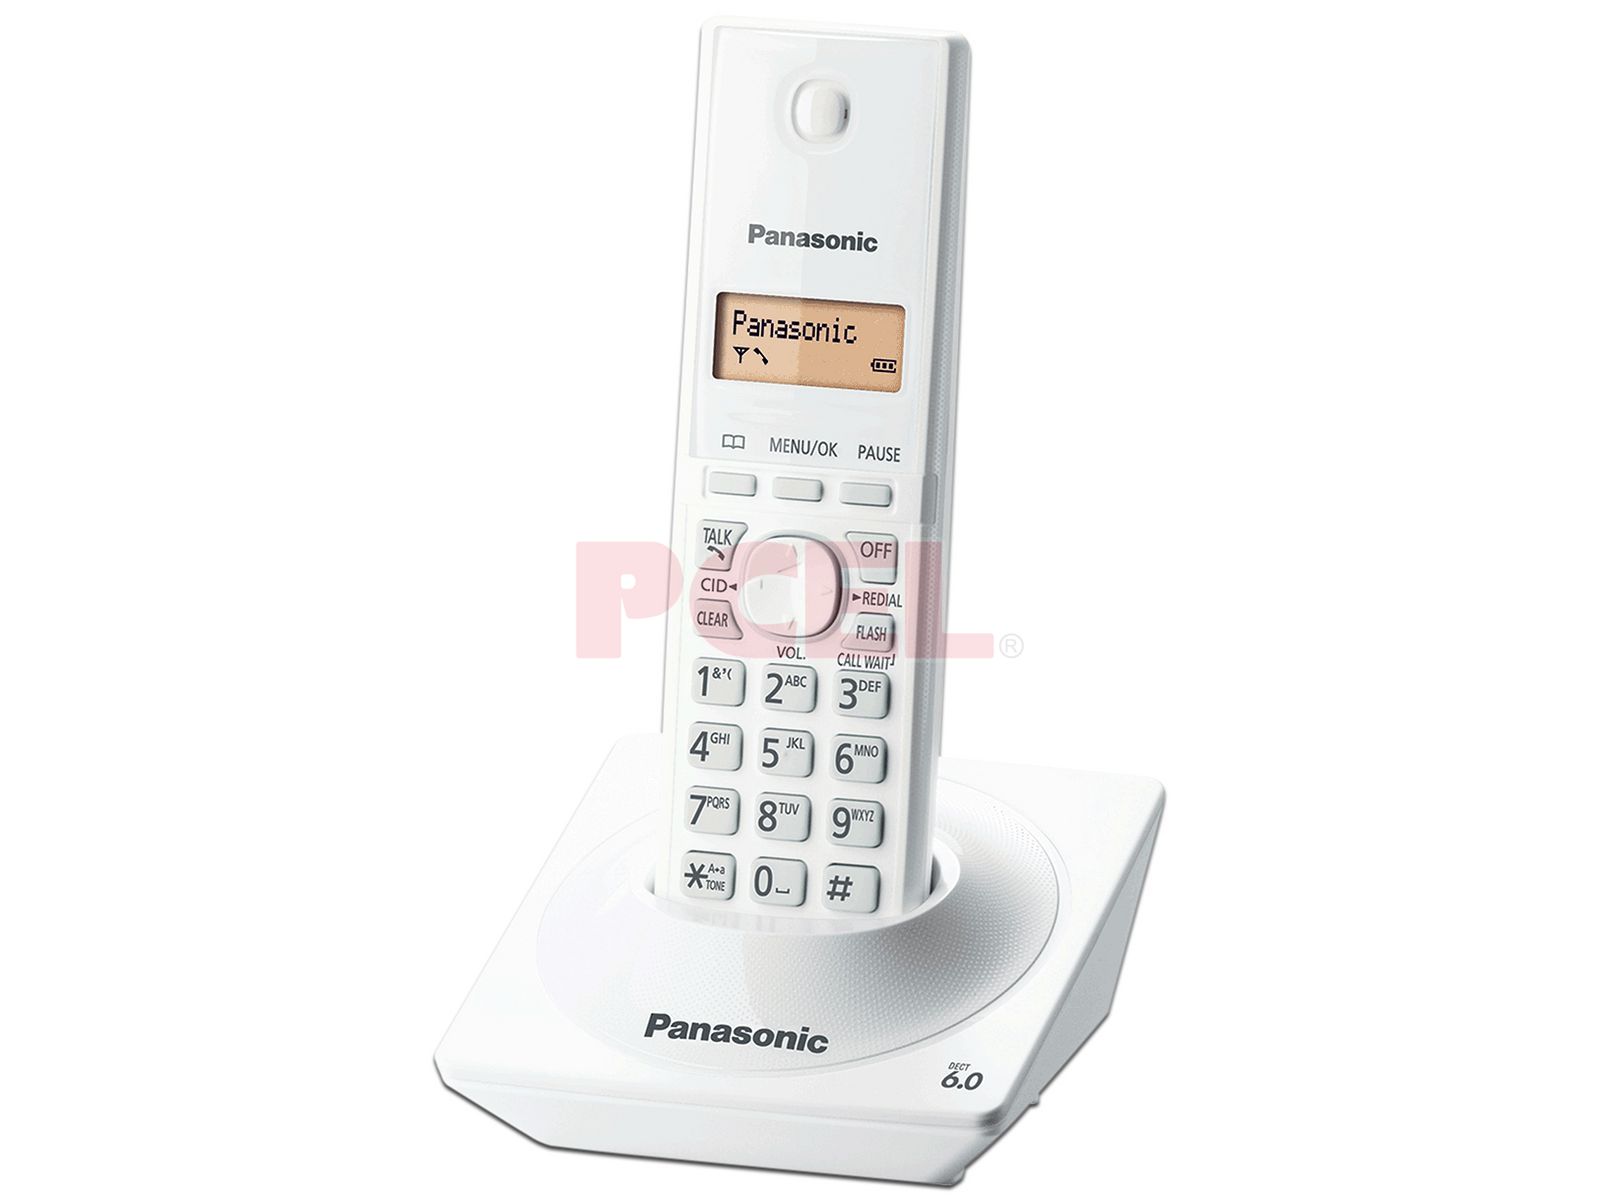 Teléfono Panasonic KX-TG1711 inalámbrico - color negro